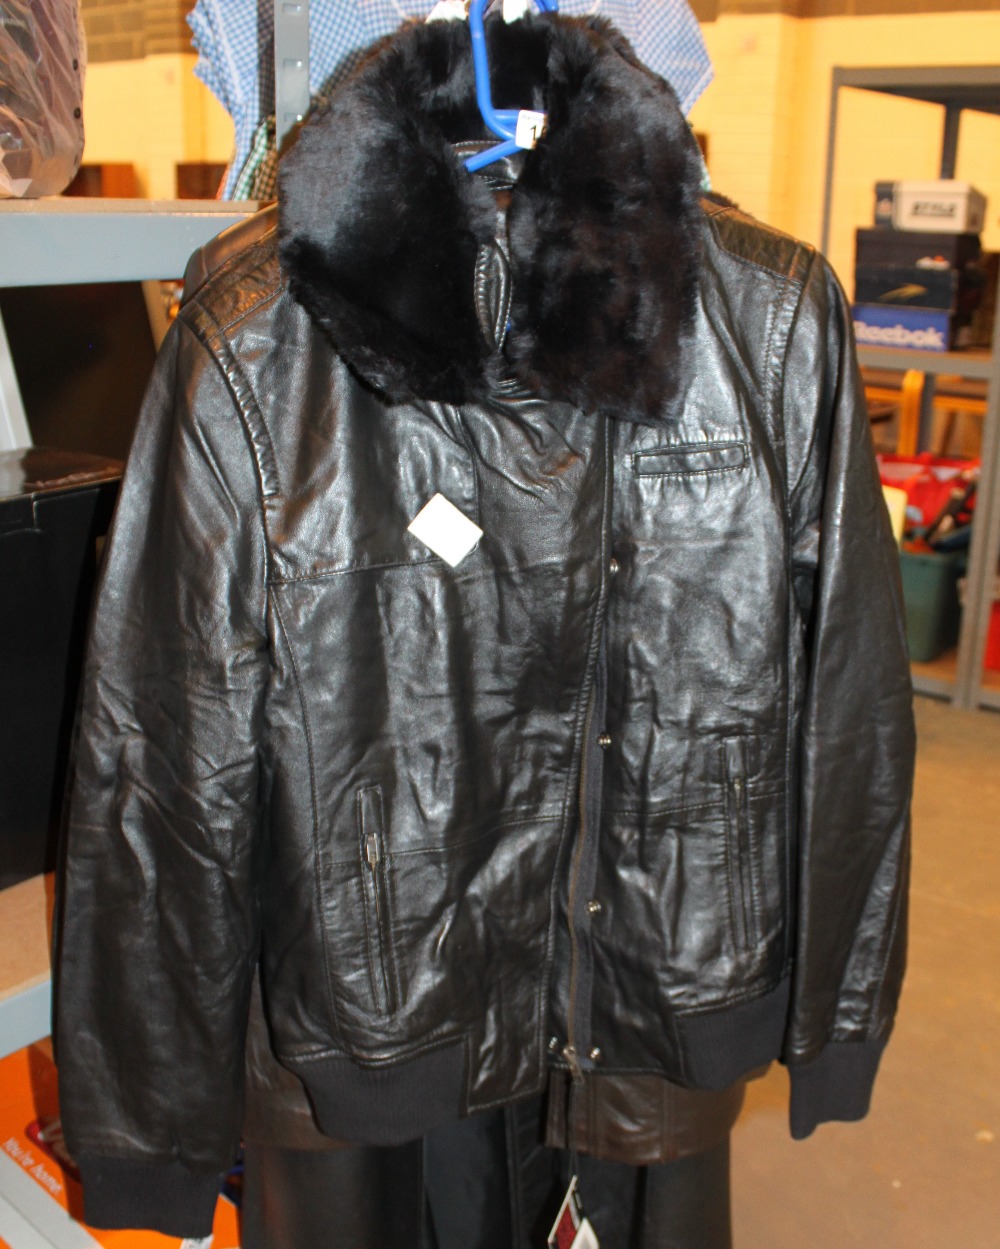 Two Eastpak apparel black leather jackets